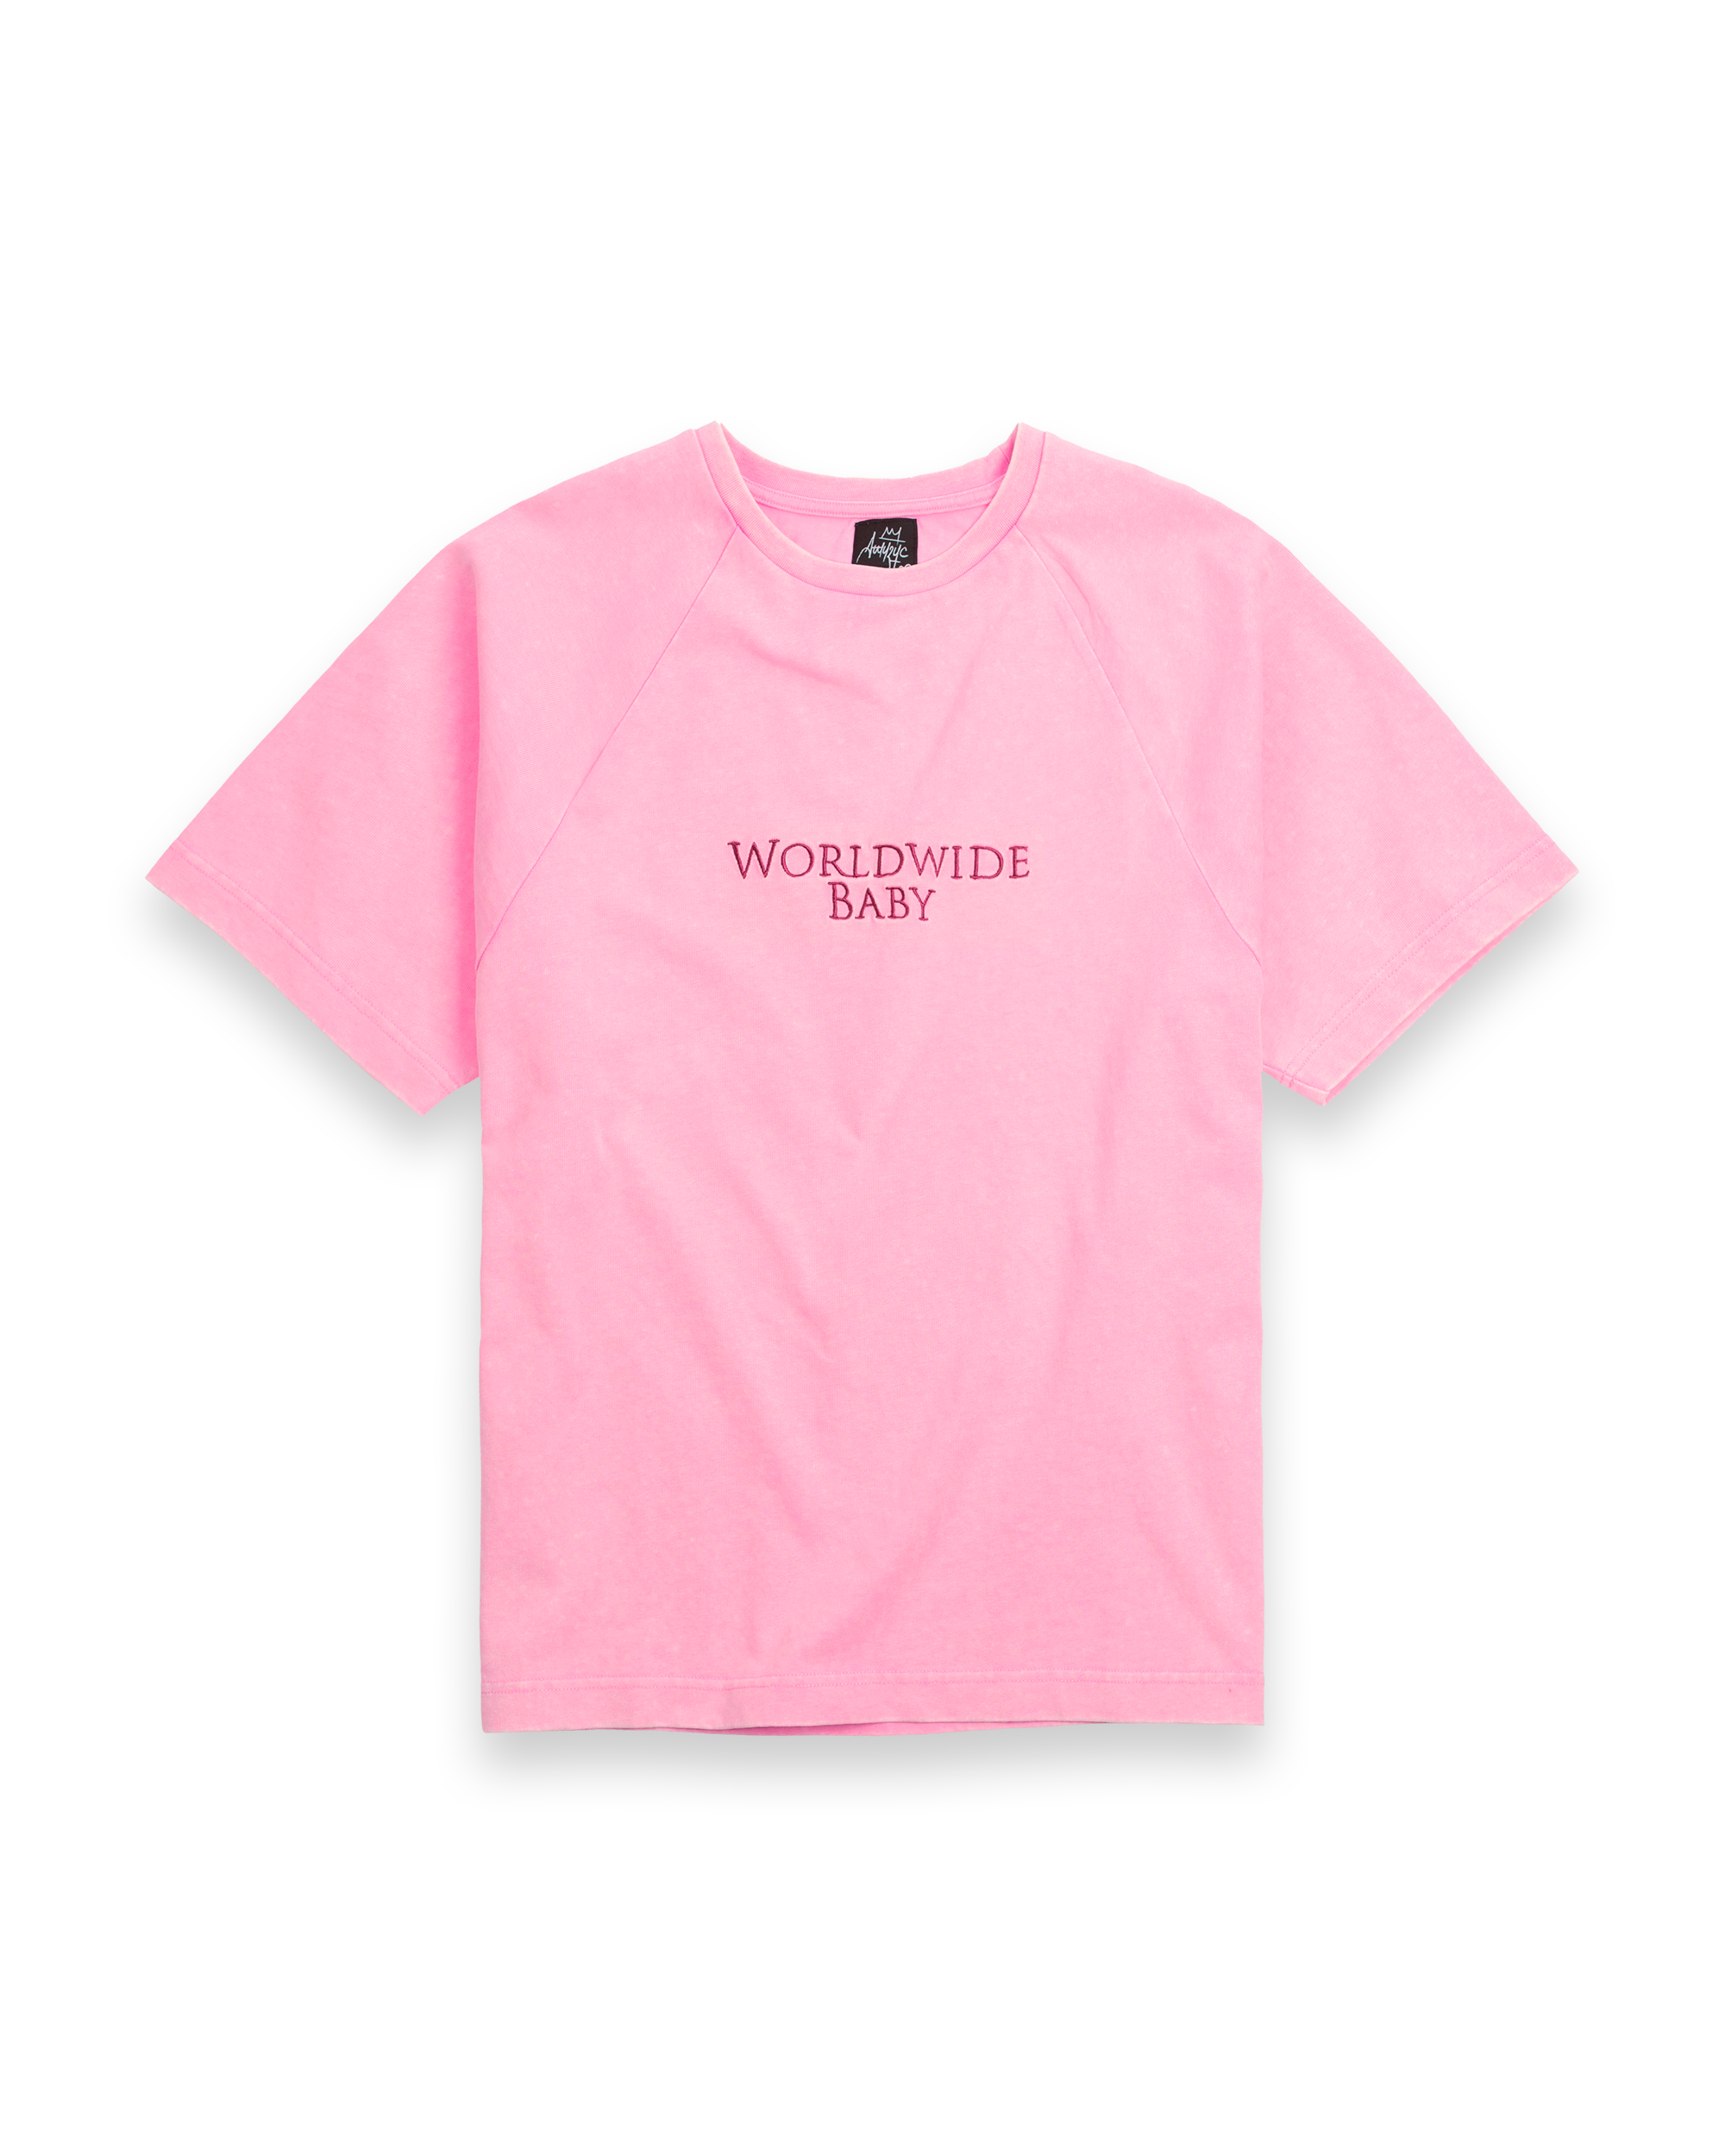 'WW Baby' t-shirt, pink